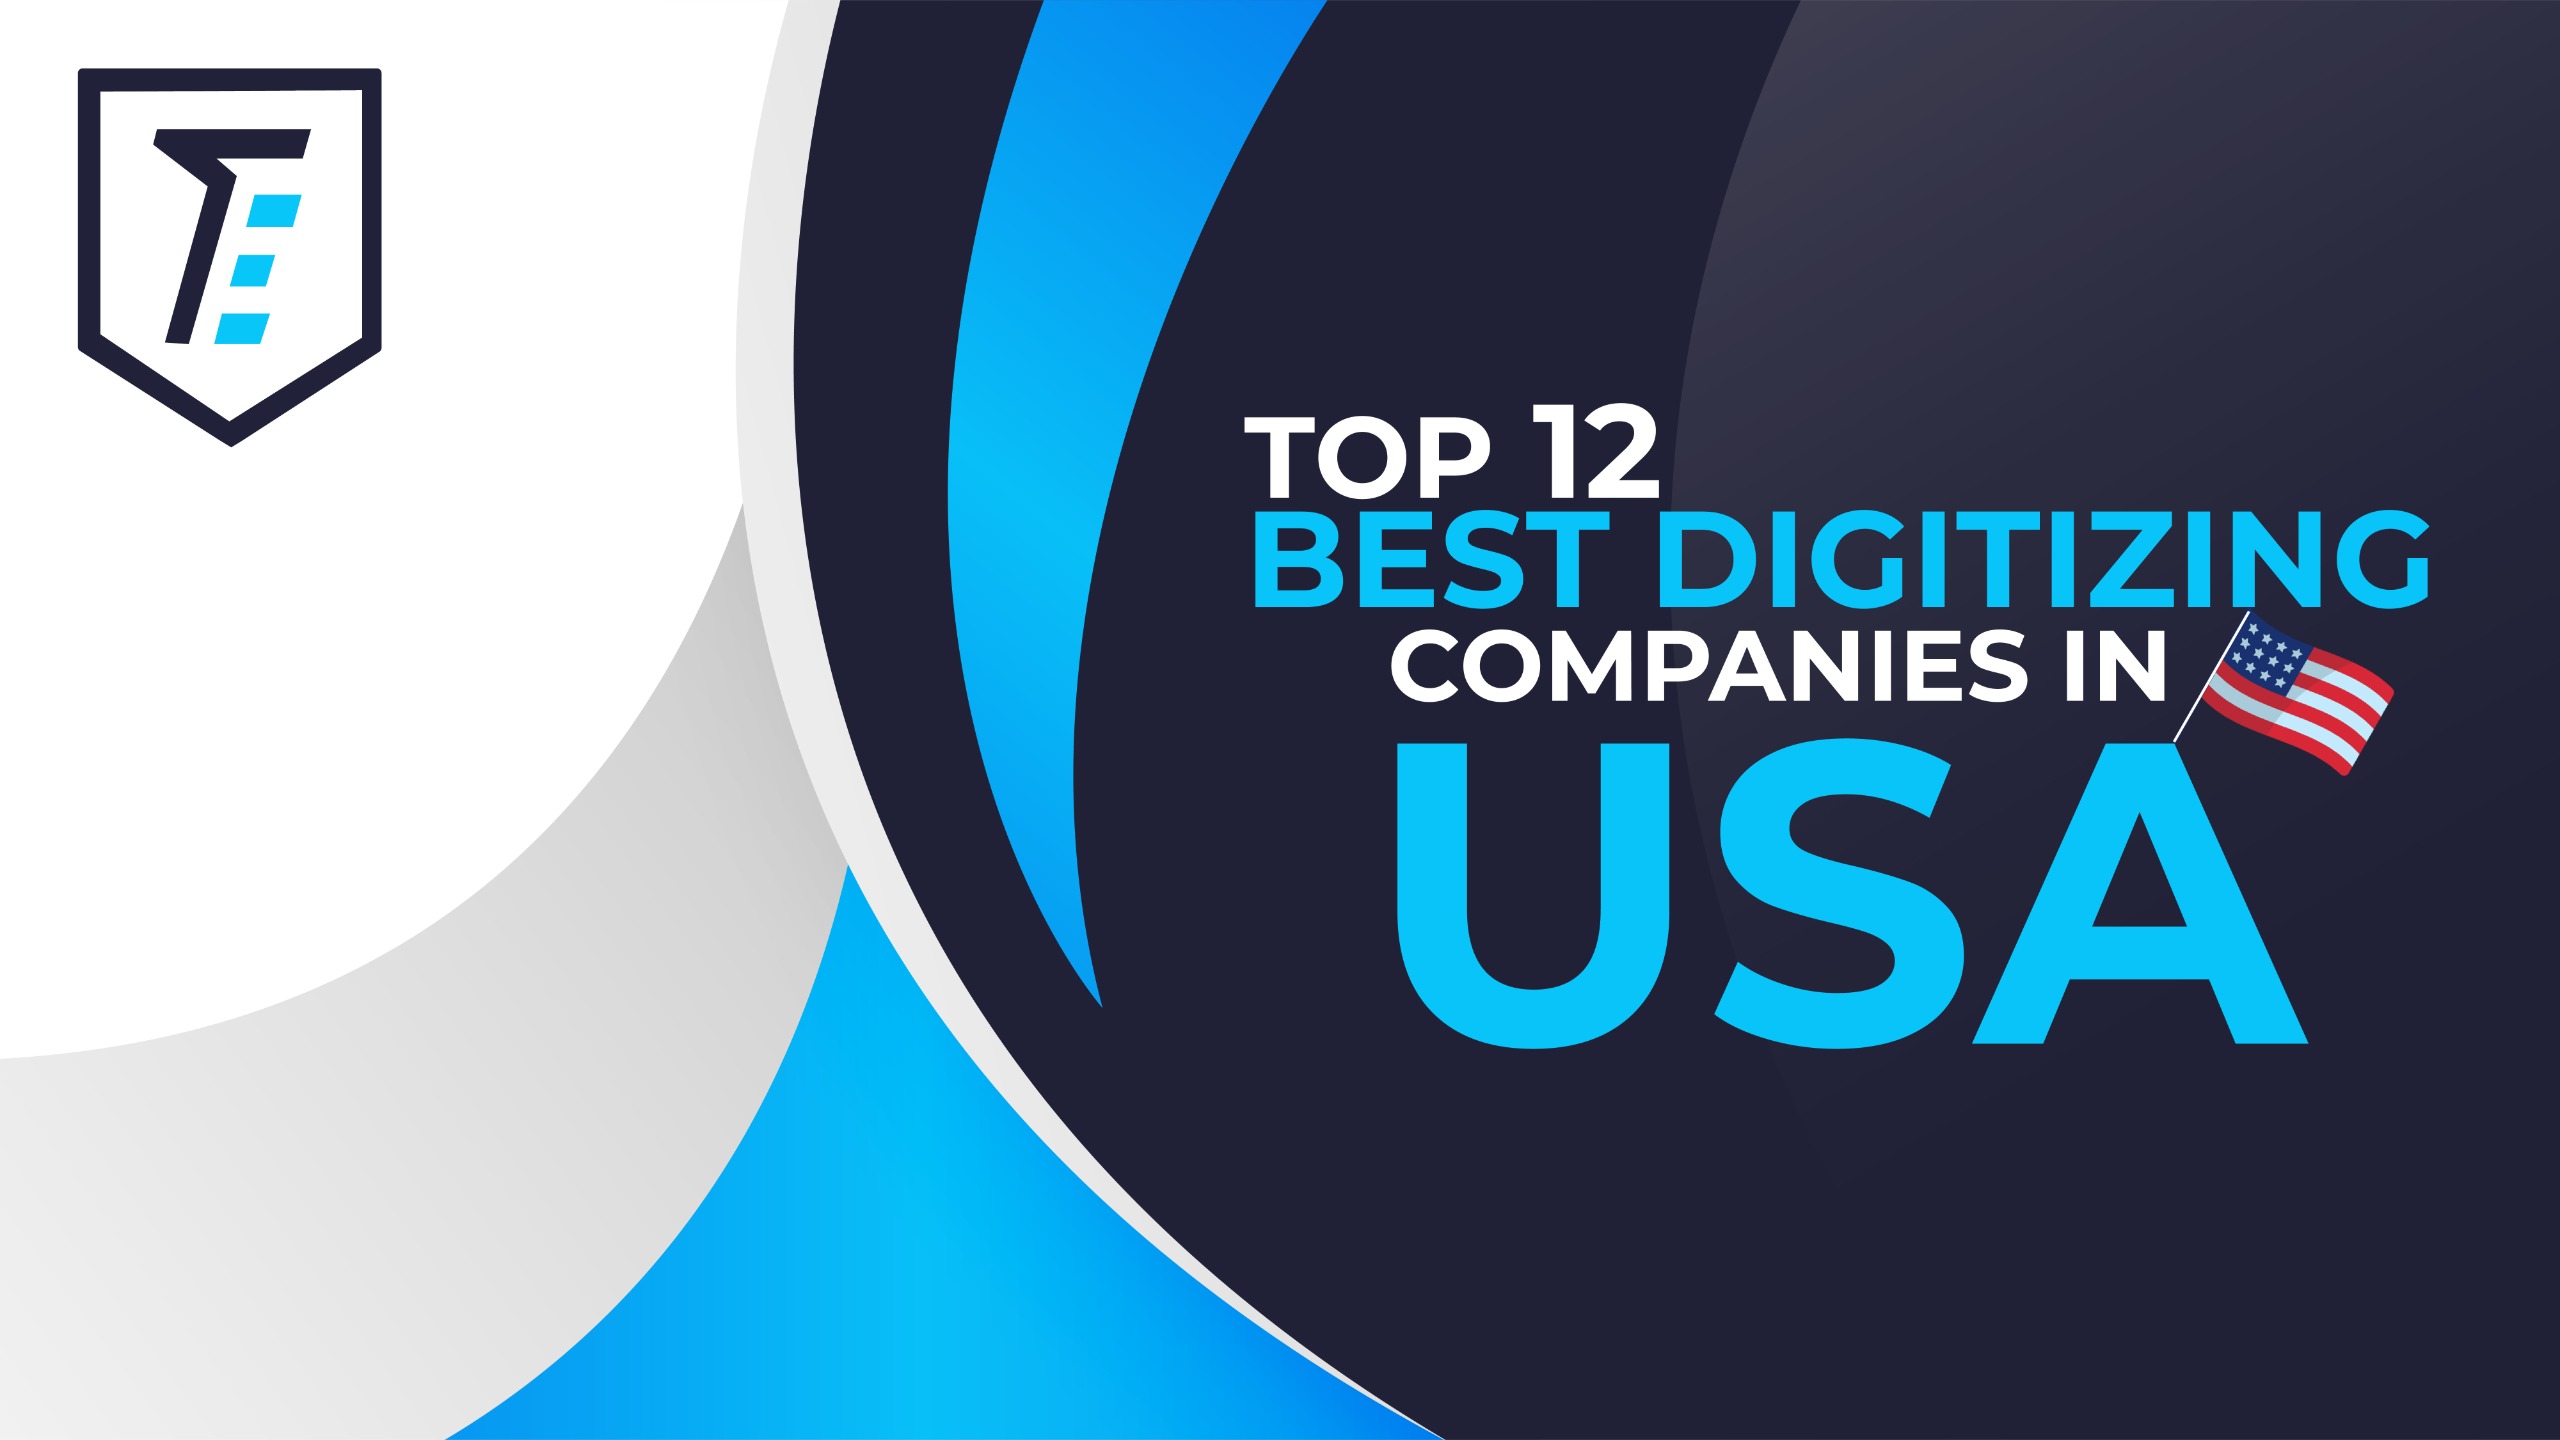 Top 12 Best Digitizing Companies in USA